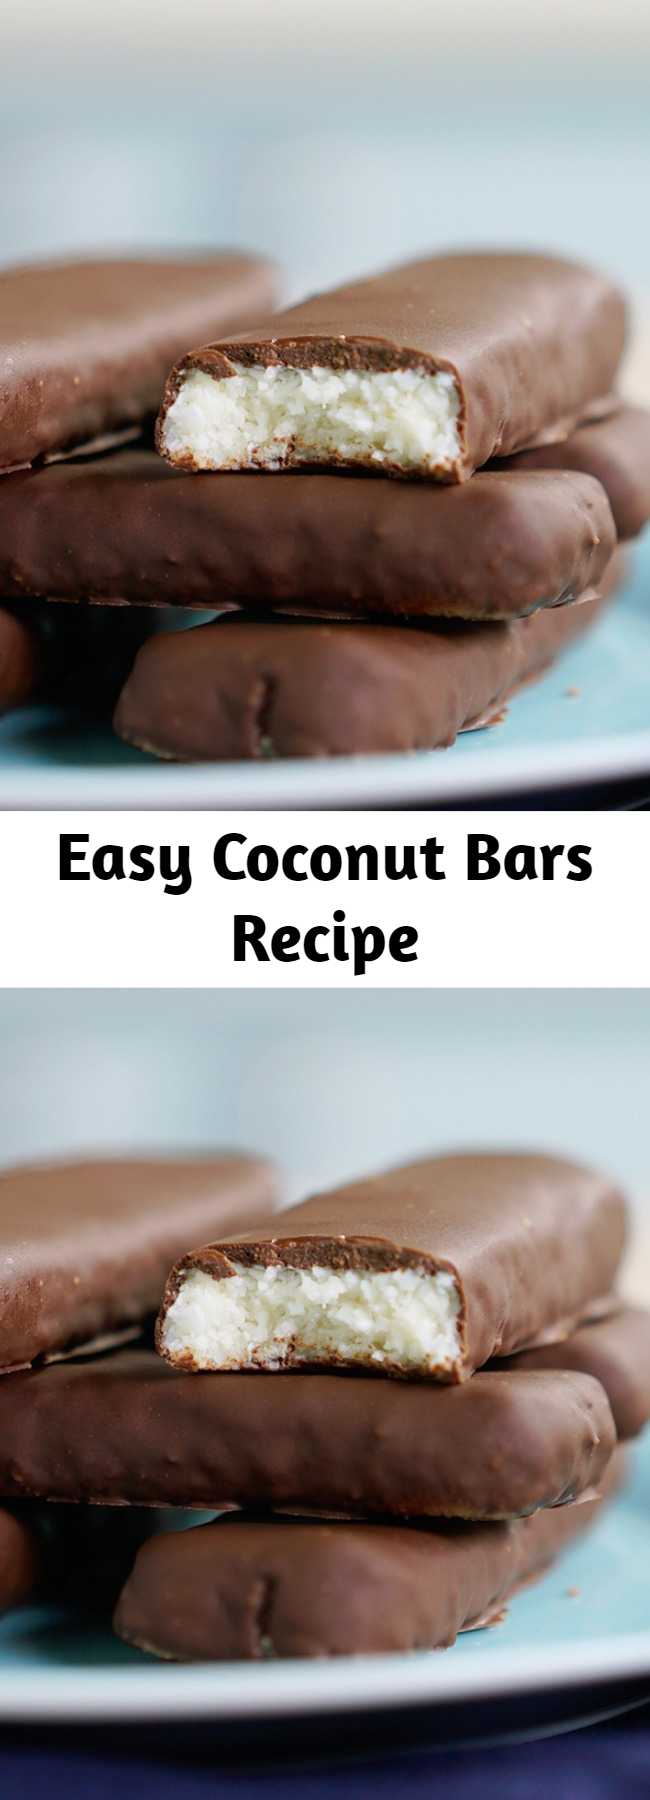 Easy Coconut Bars Recipe